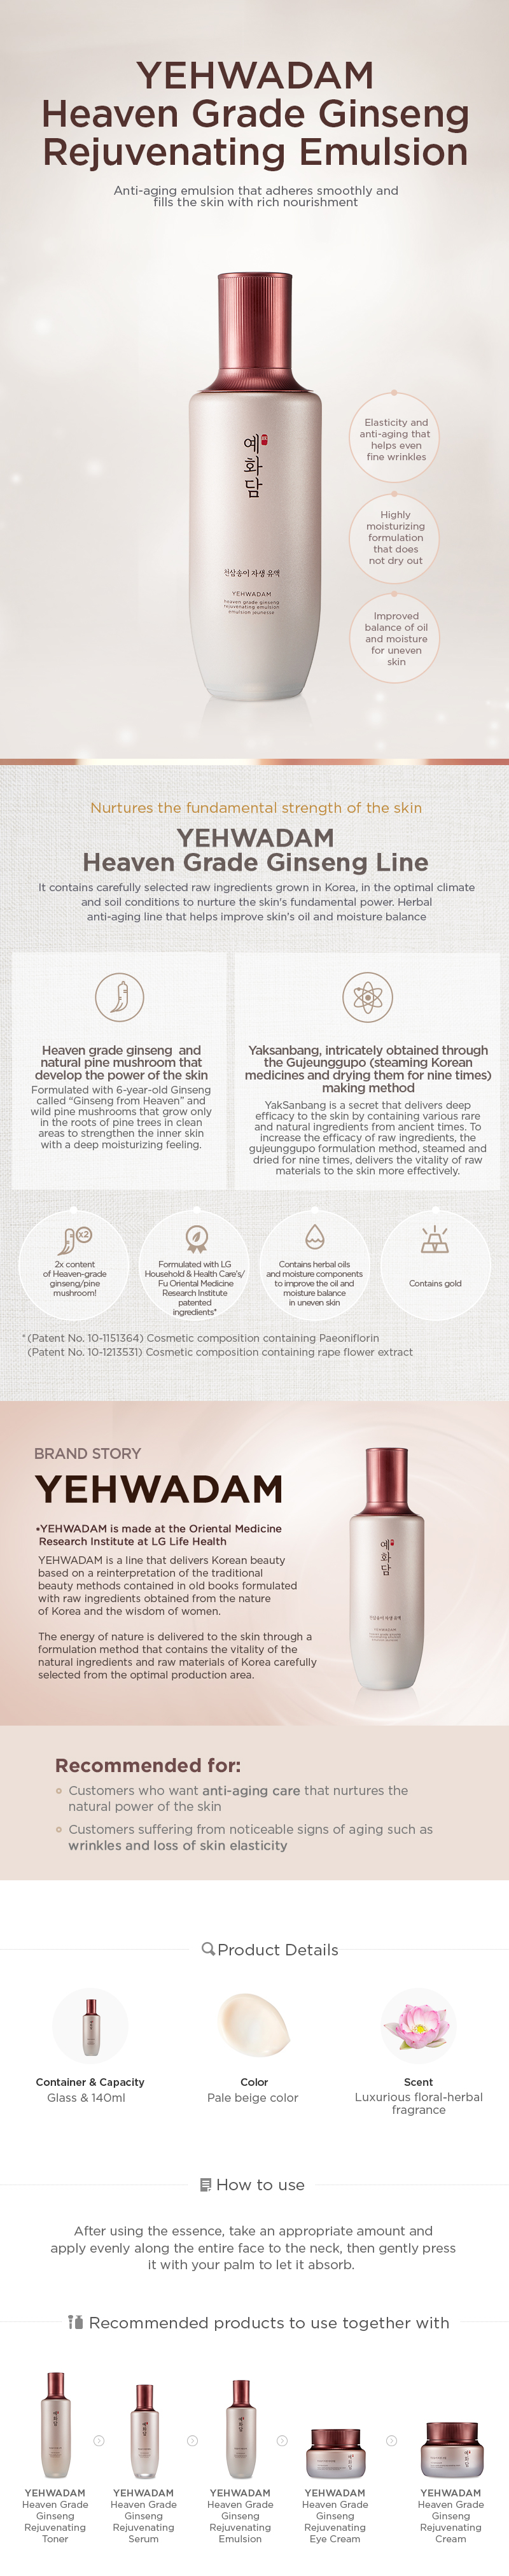 Yehwadam Heaven Grade Ginseng Rejuvenating Emulsion